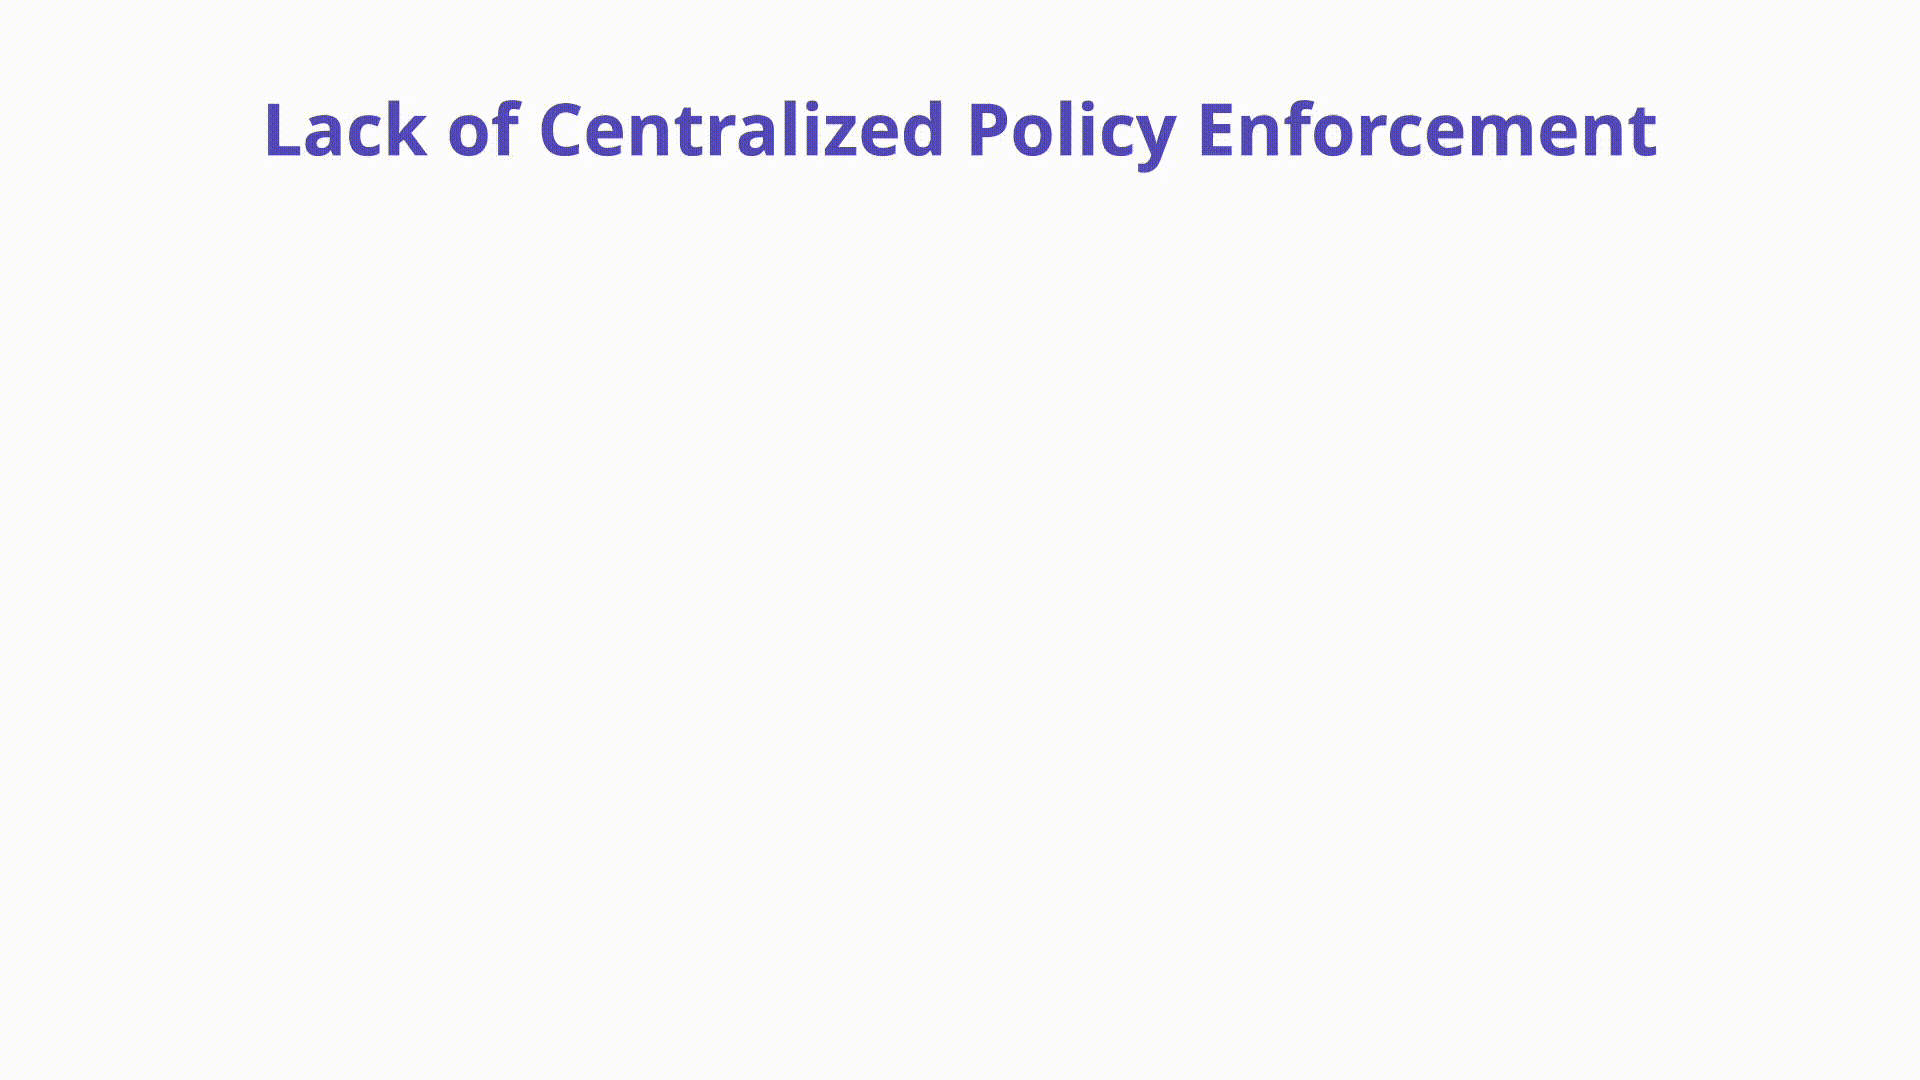 Policy Enforcement - Illustration